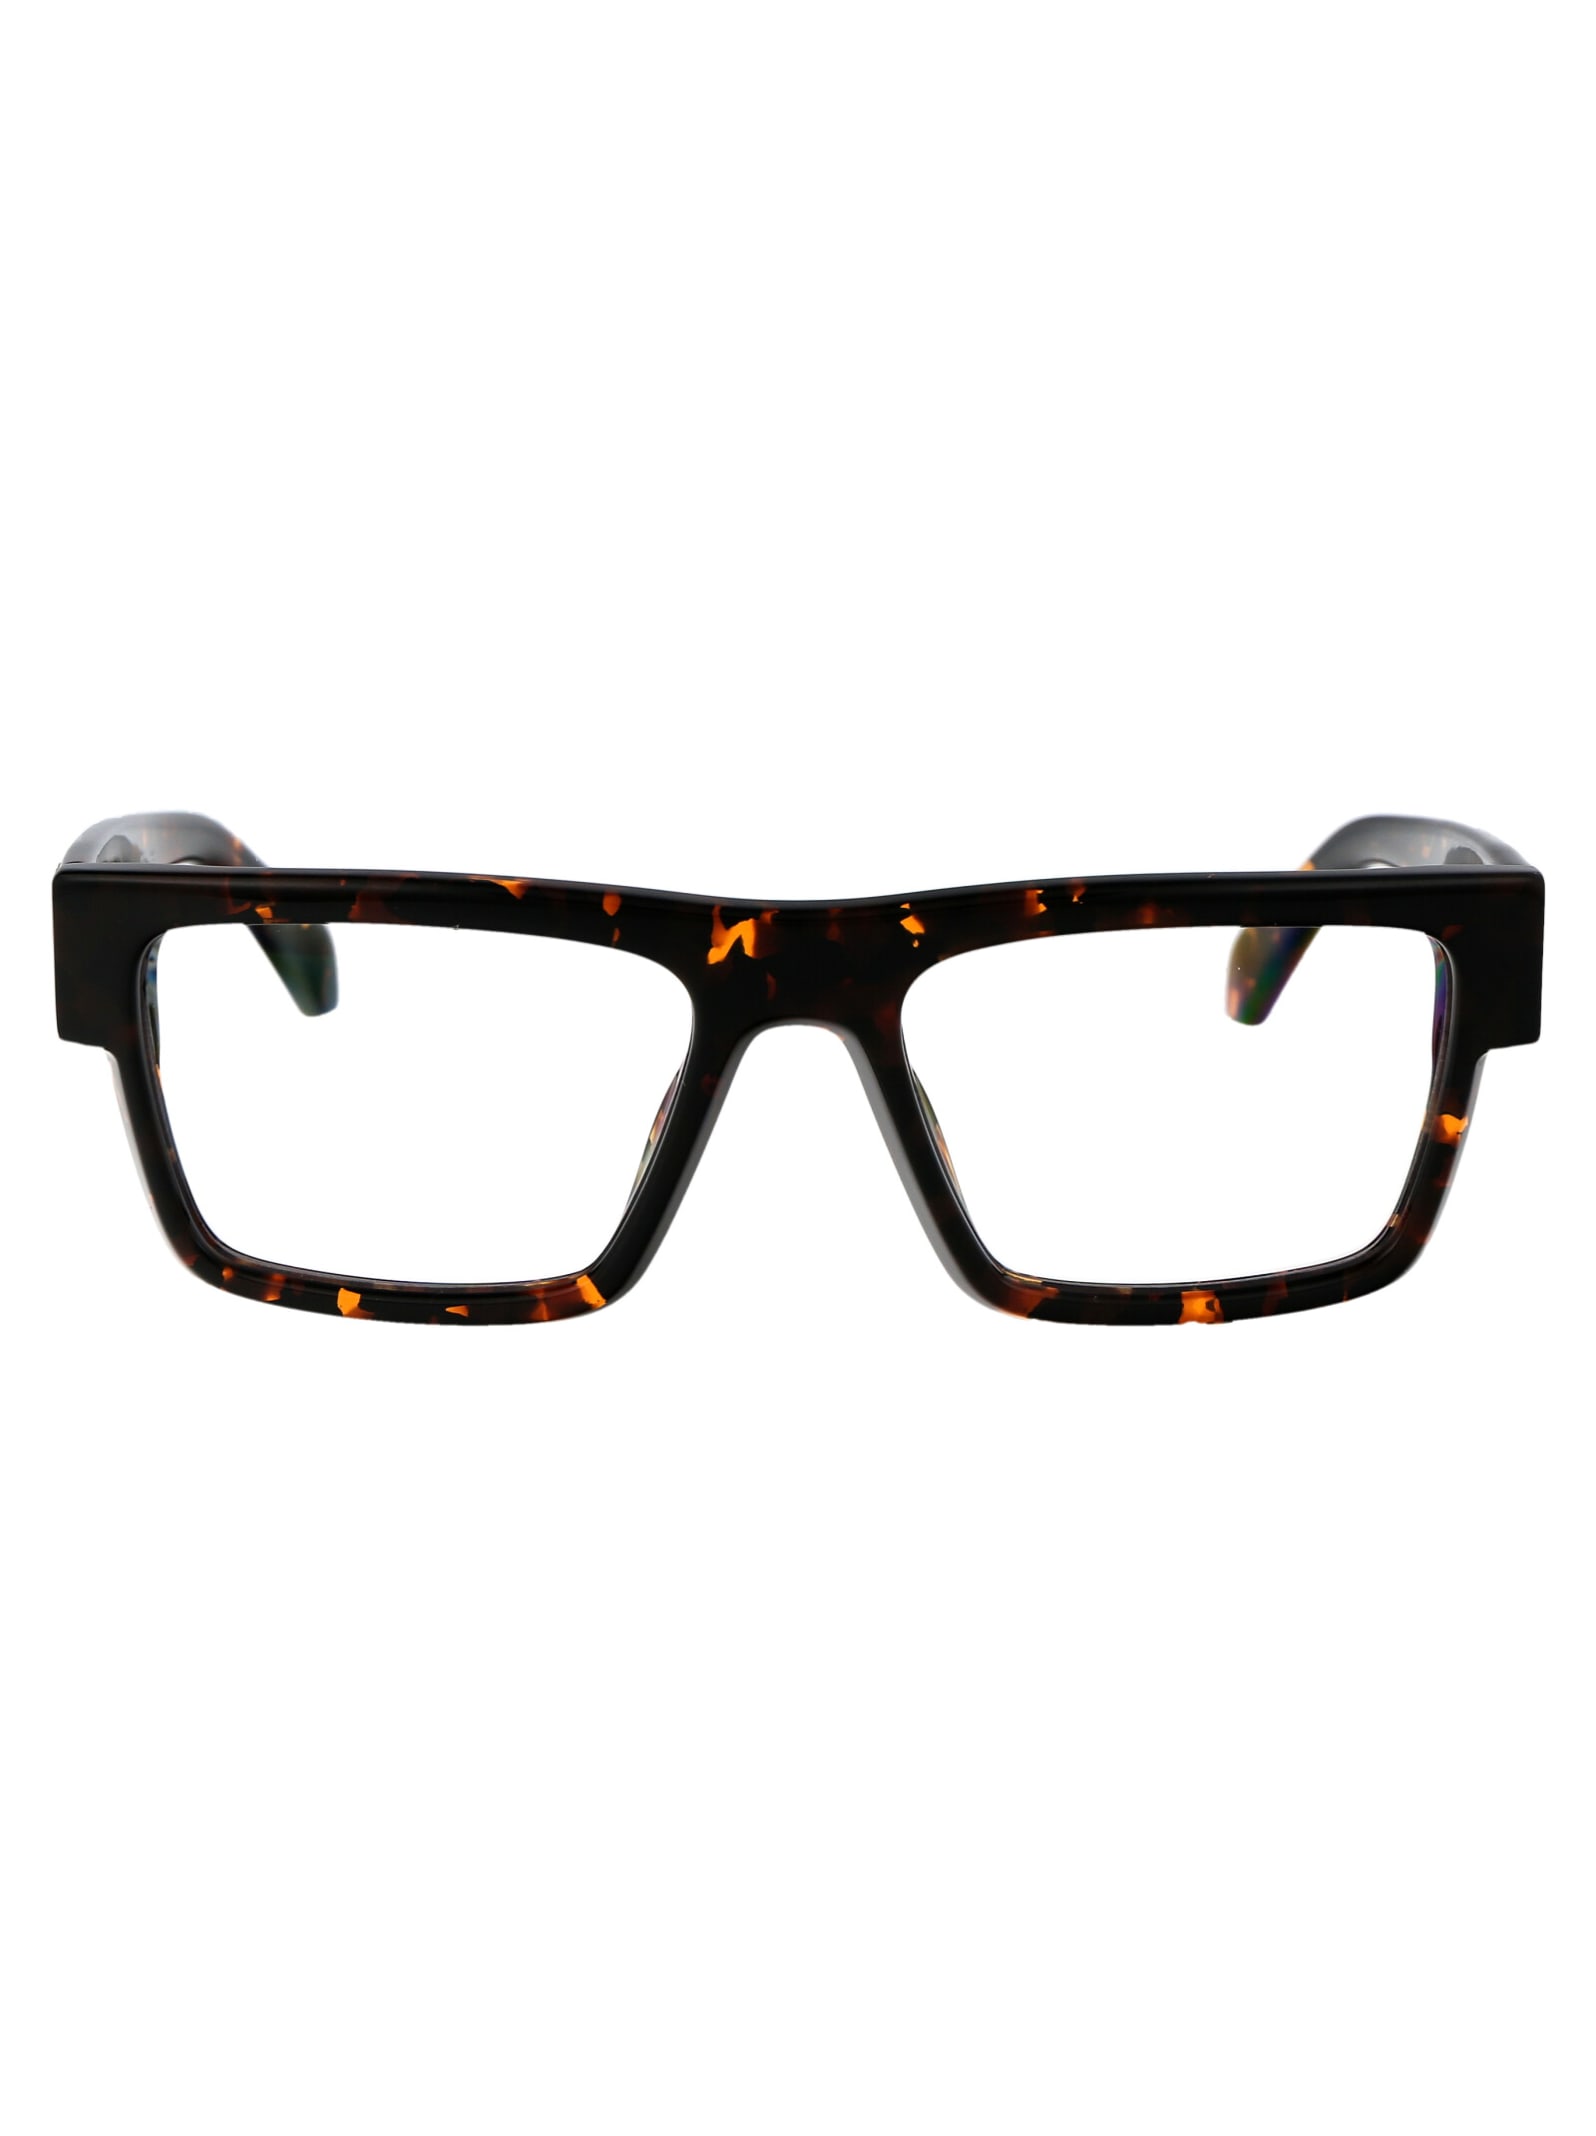 Optical Style 61 Glasses